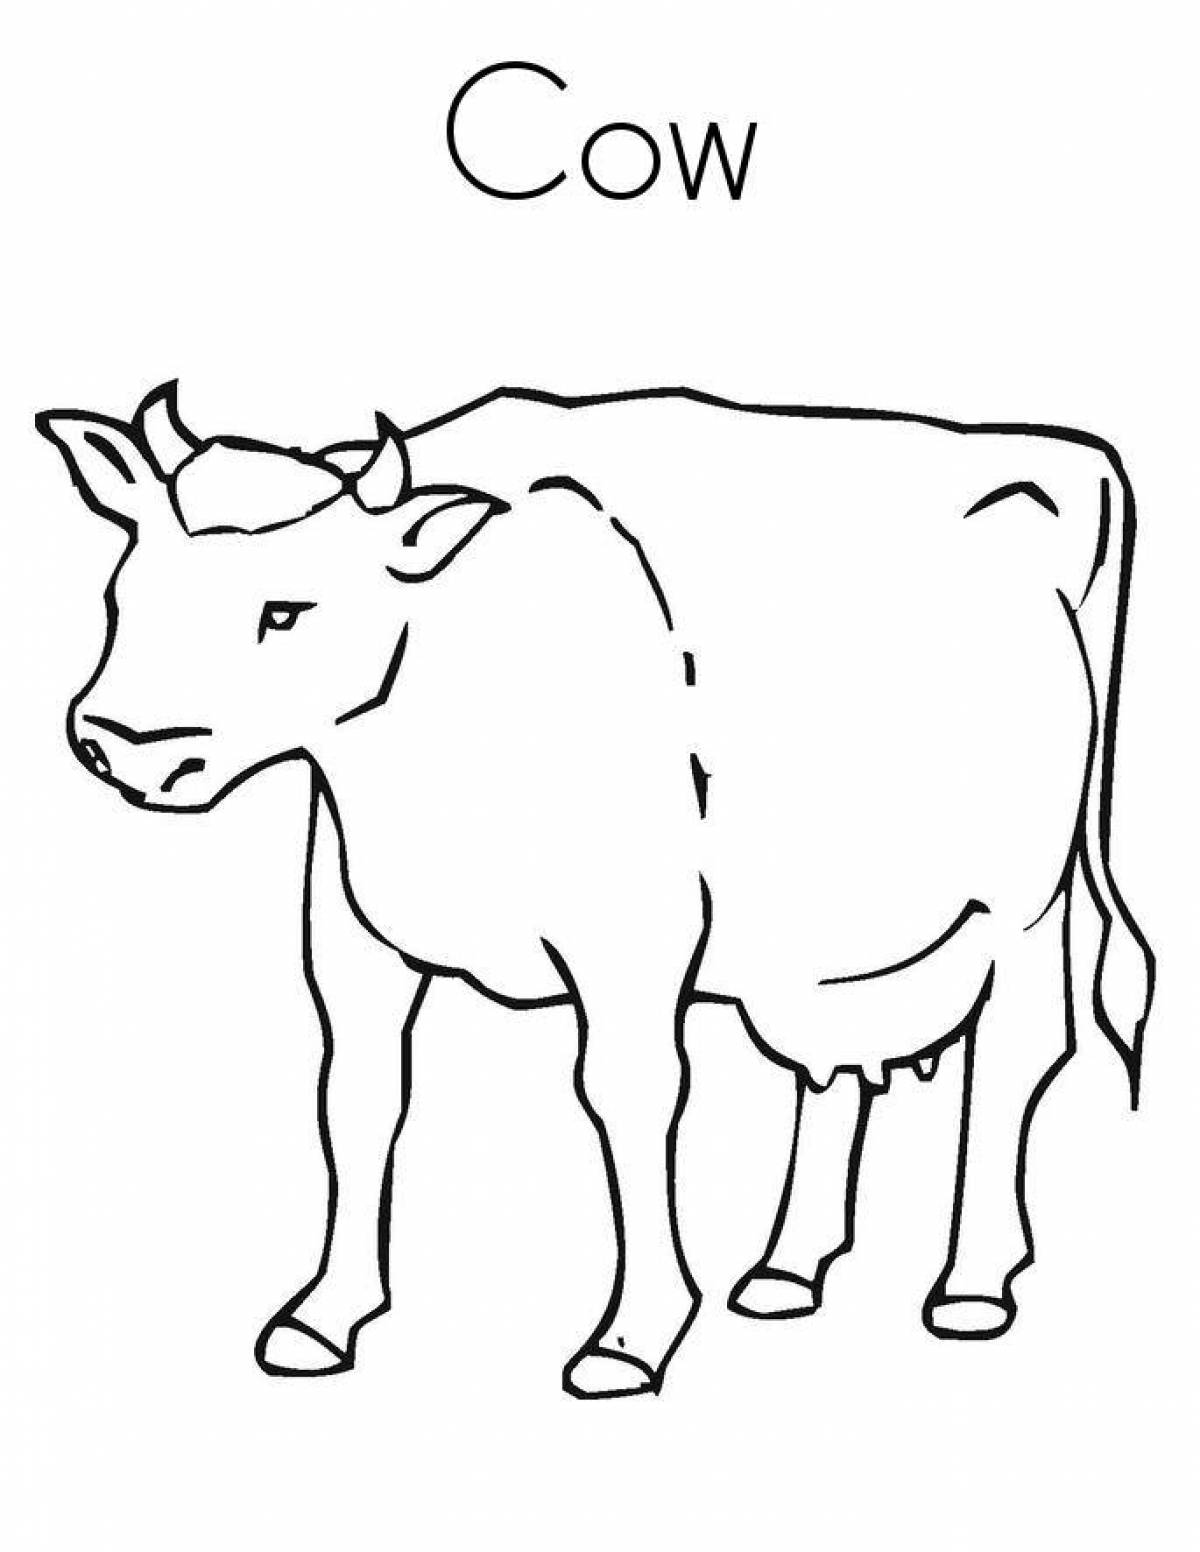 Cow #11